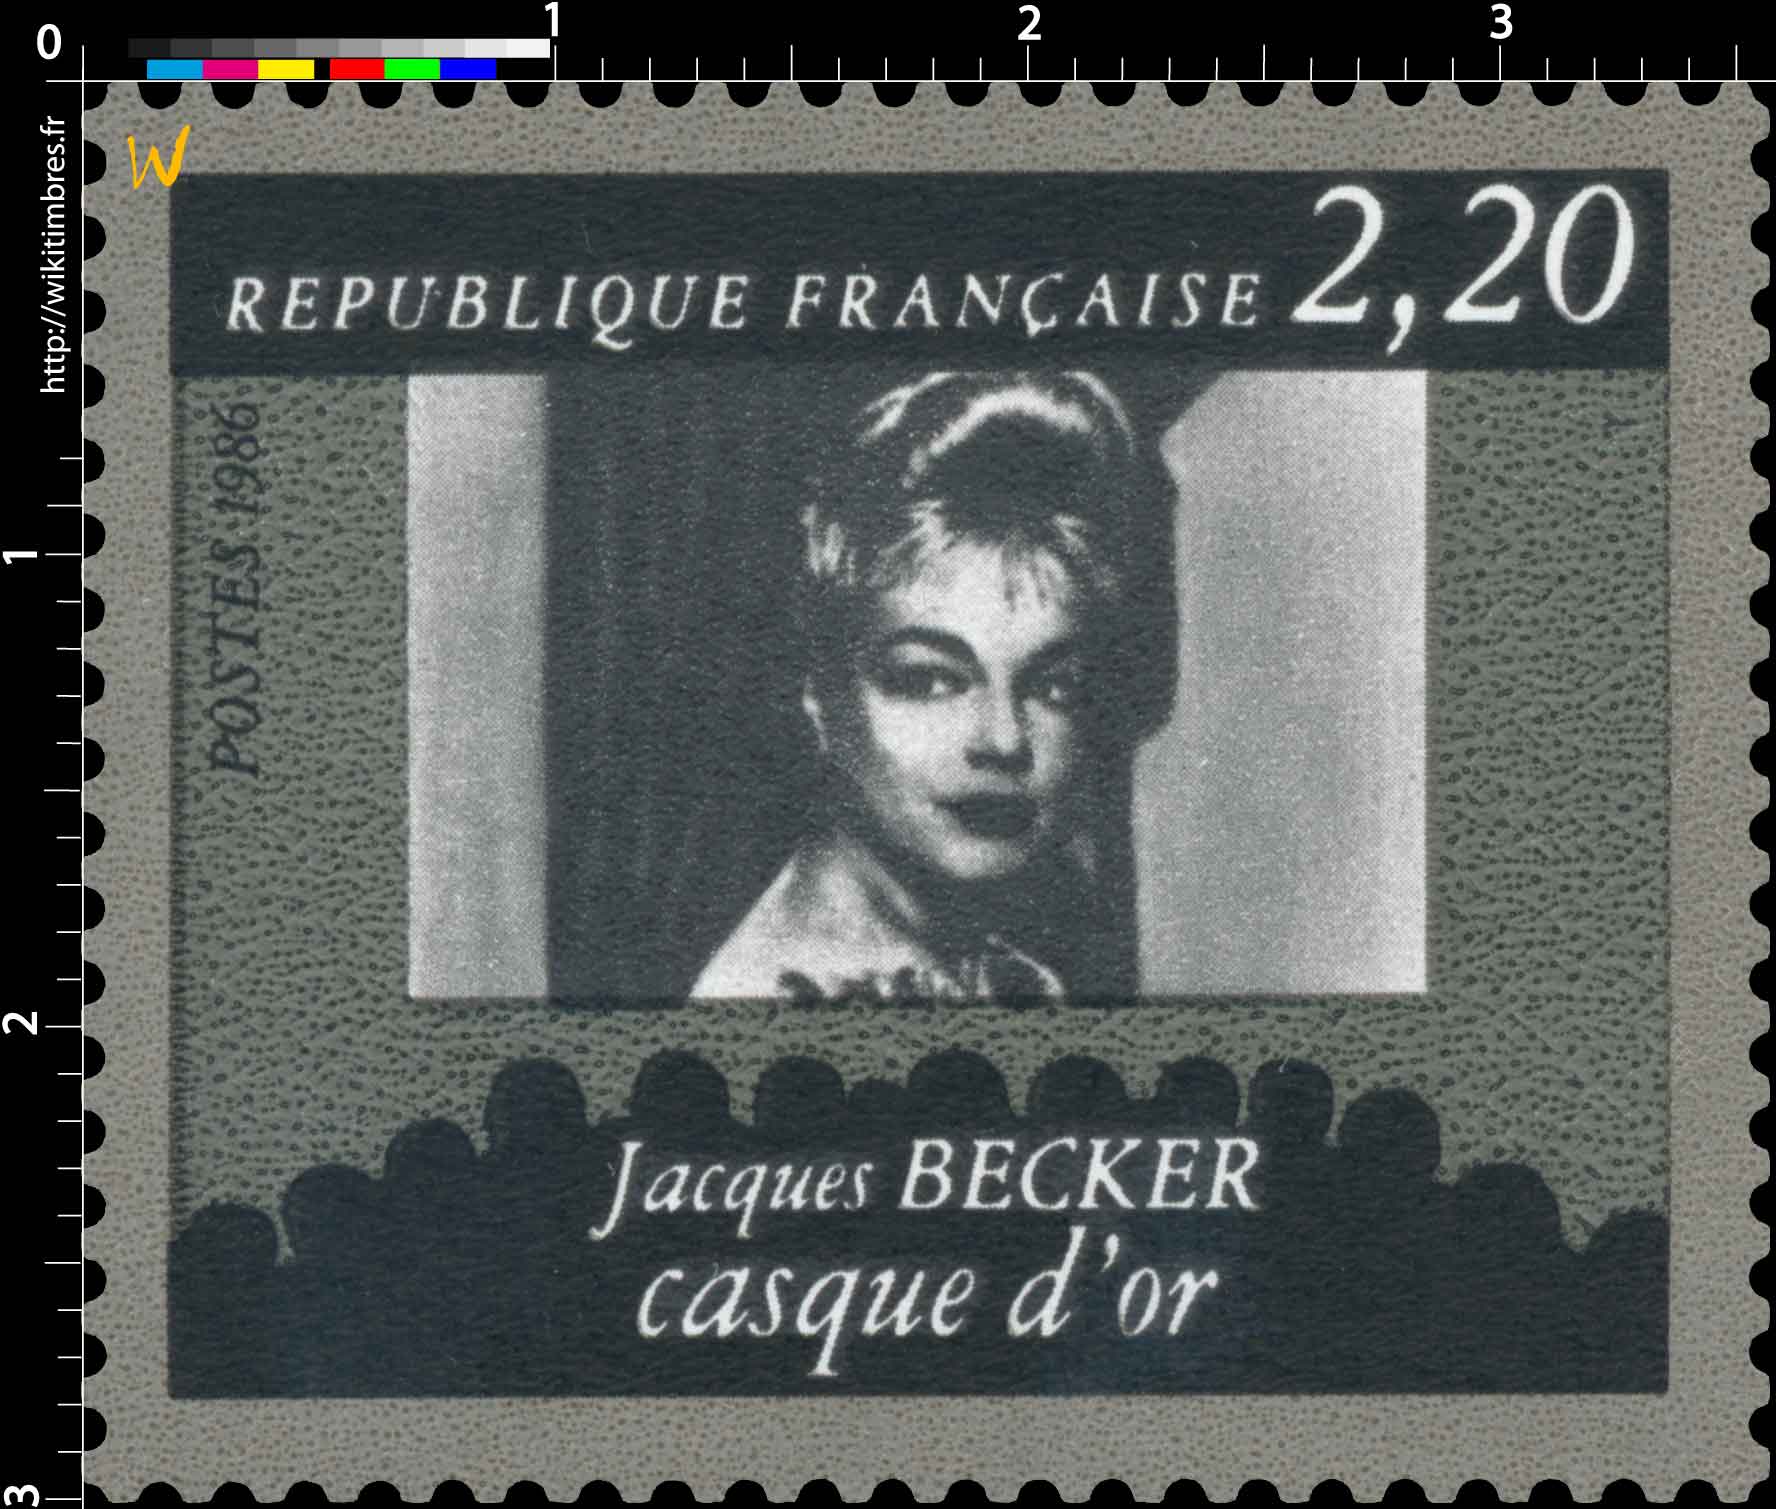 1986 Jacques BECKER casque d'or